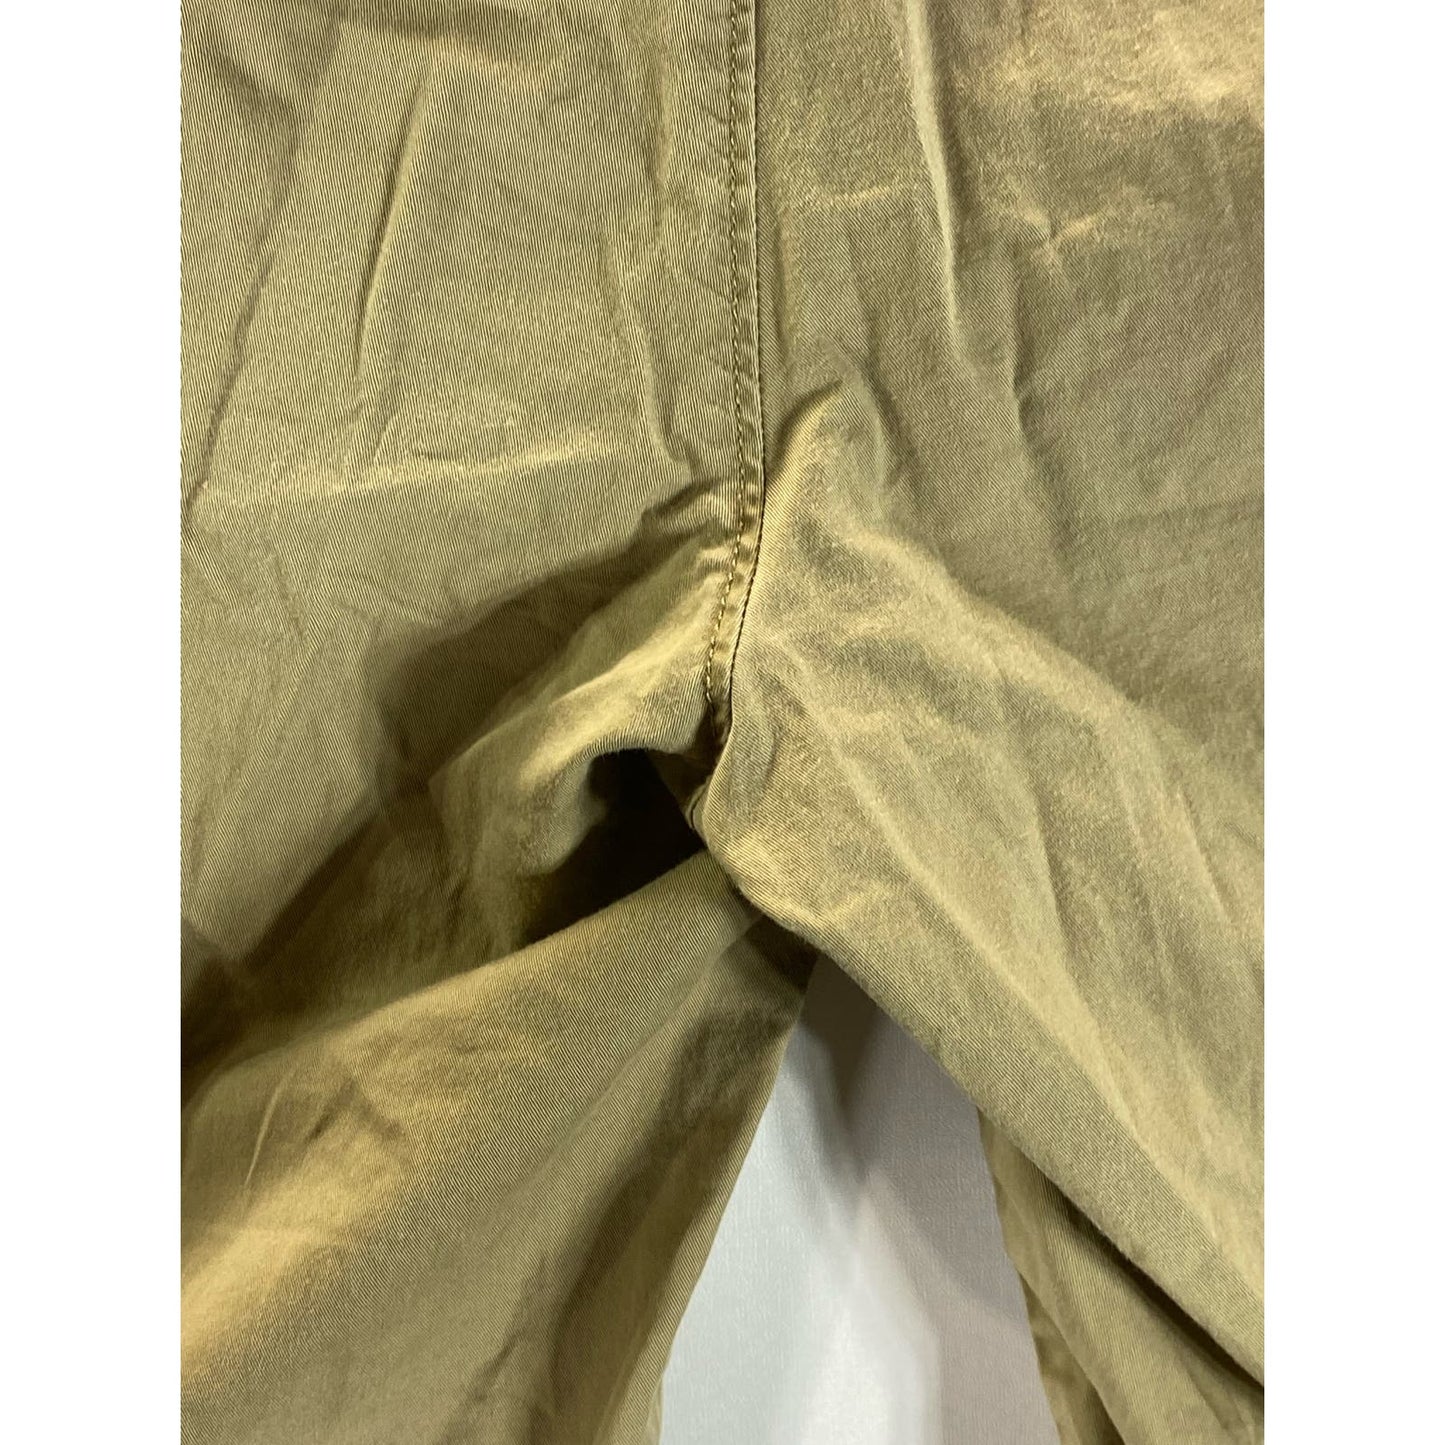 J. CREW Men's Tan Regular-Fit 10.5" Stretch Five-Pocket Chino Shorts SZ 31